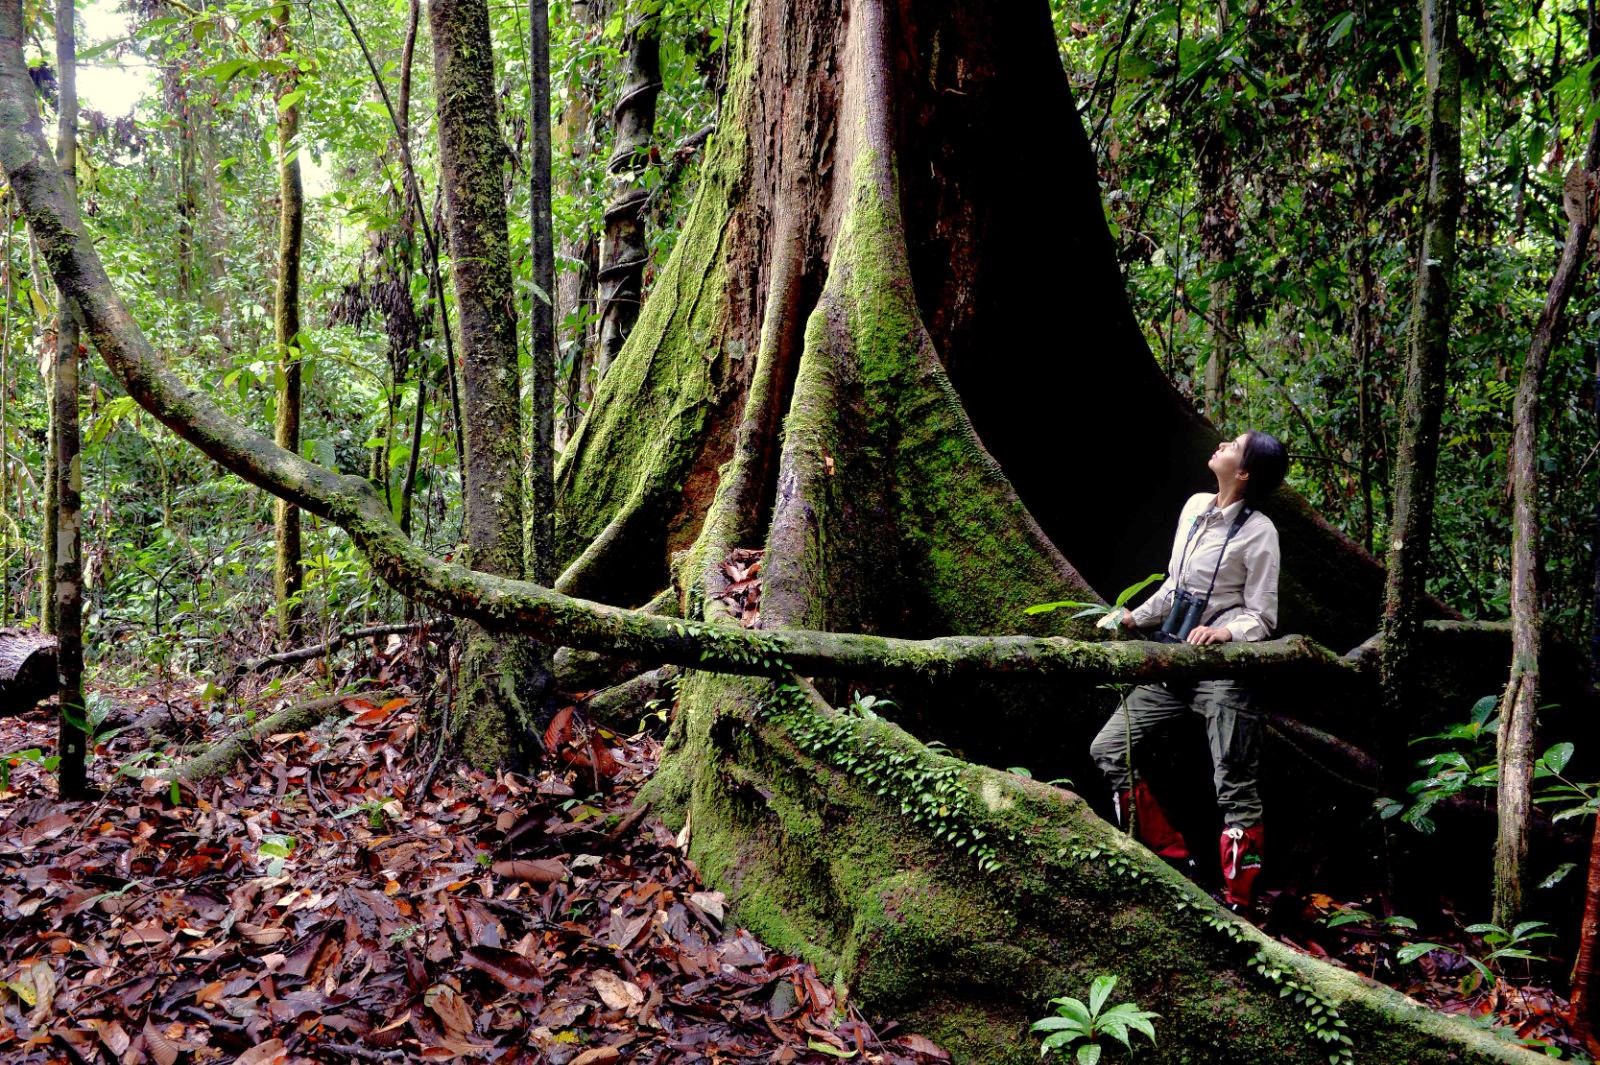 Jungle trekking at Borneo Rainforest Lodge in Malaysia's Danum Valley